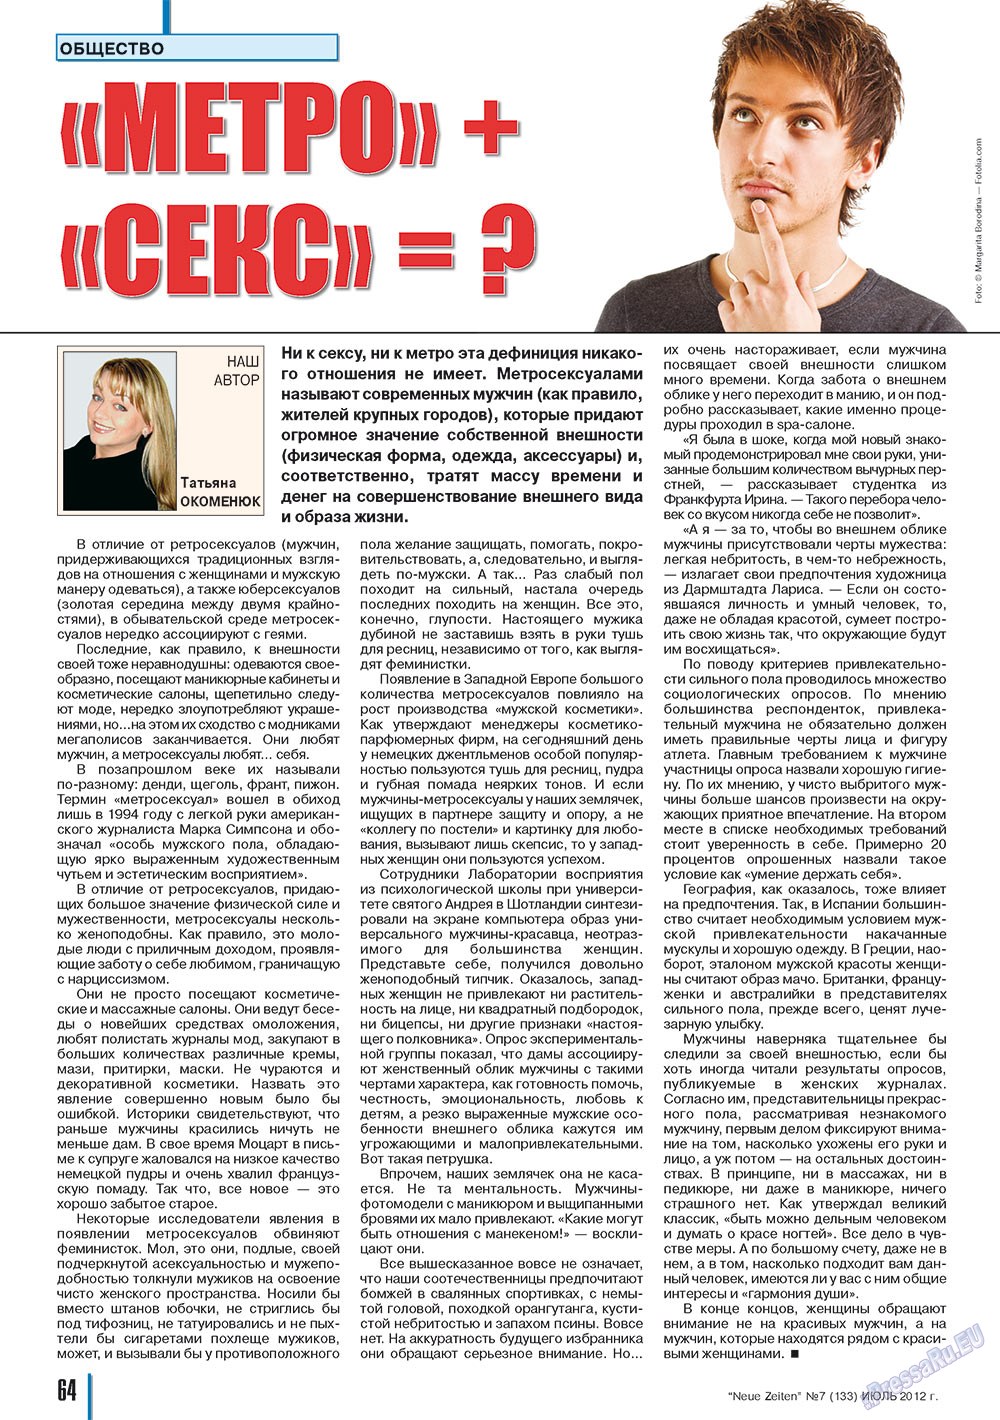 Neue Zeiten (журнал). 2012 год, номер 7, стр. 64